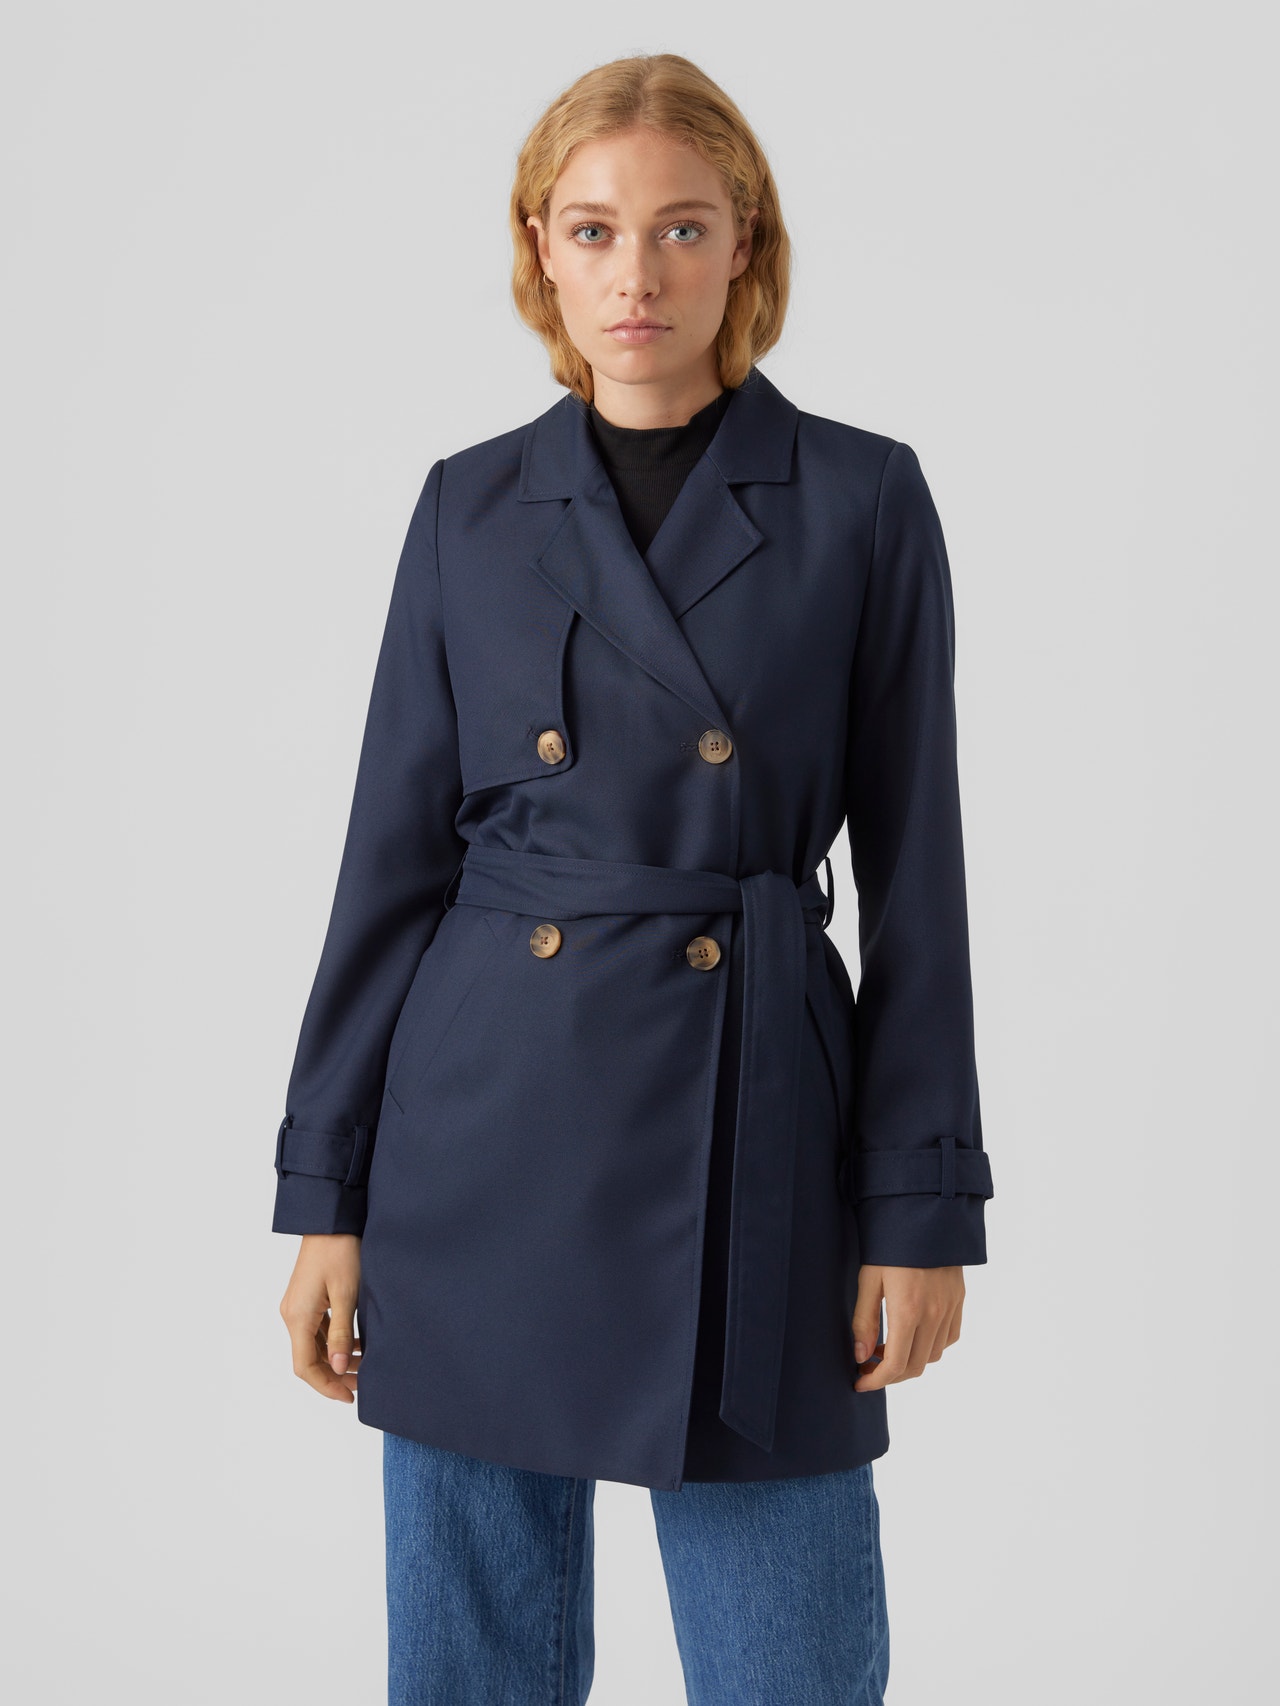 VMCELESTE Coat with | Moda® Vero 50% discount